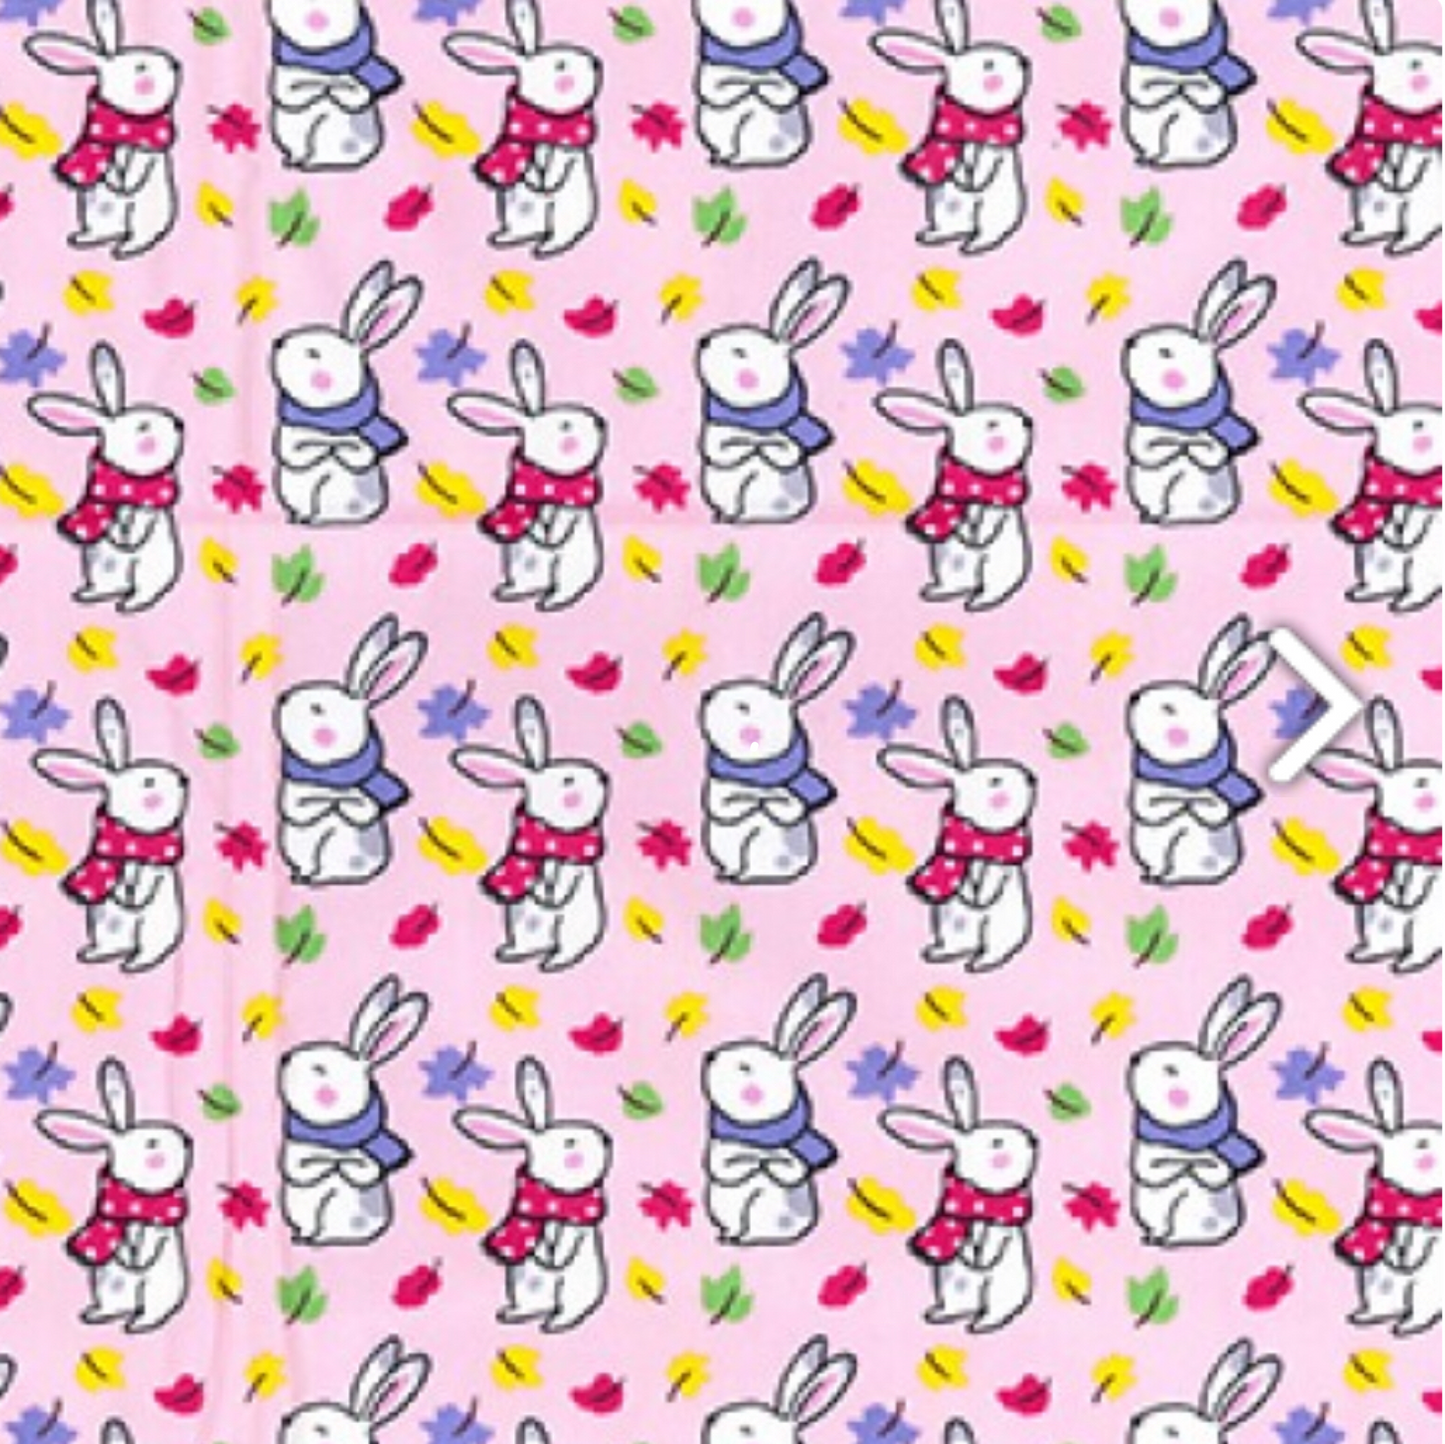 Little Bunnies in Scarves on Pink 100% Cotton Fabric - Rosie's Craft Shop Ltd